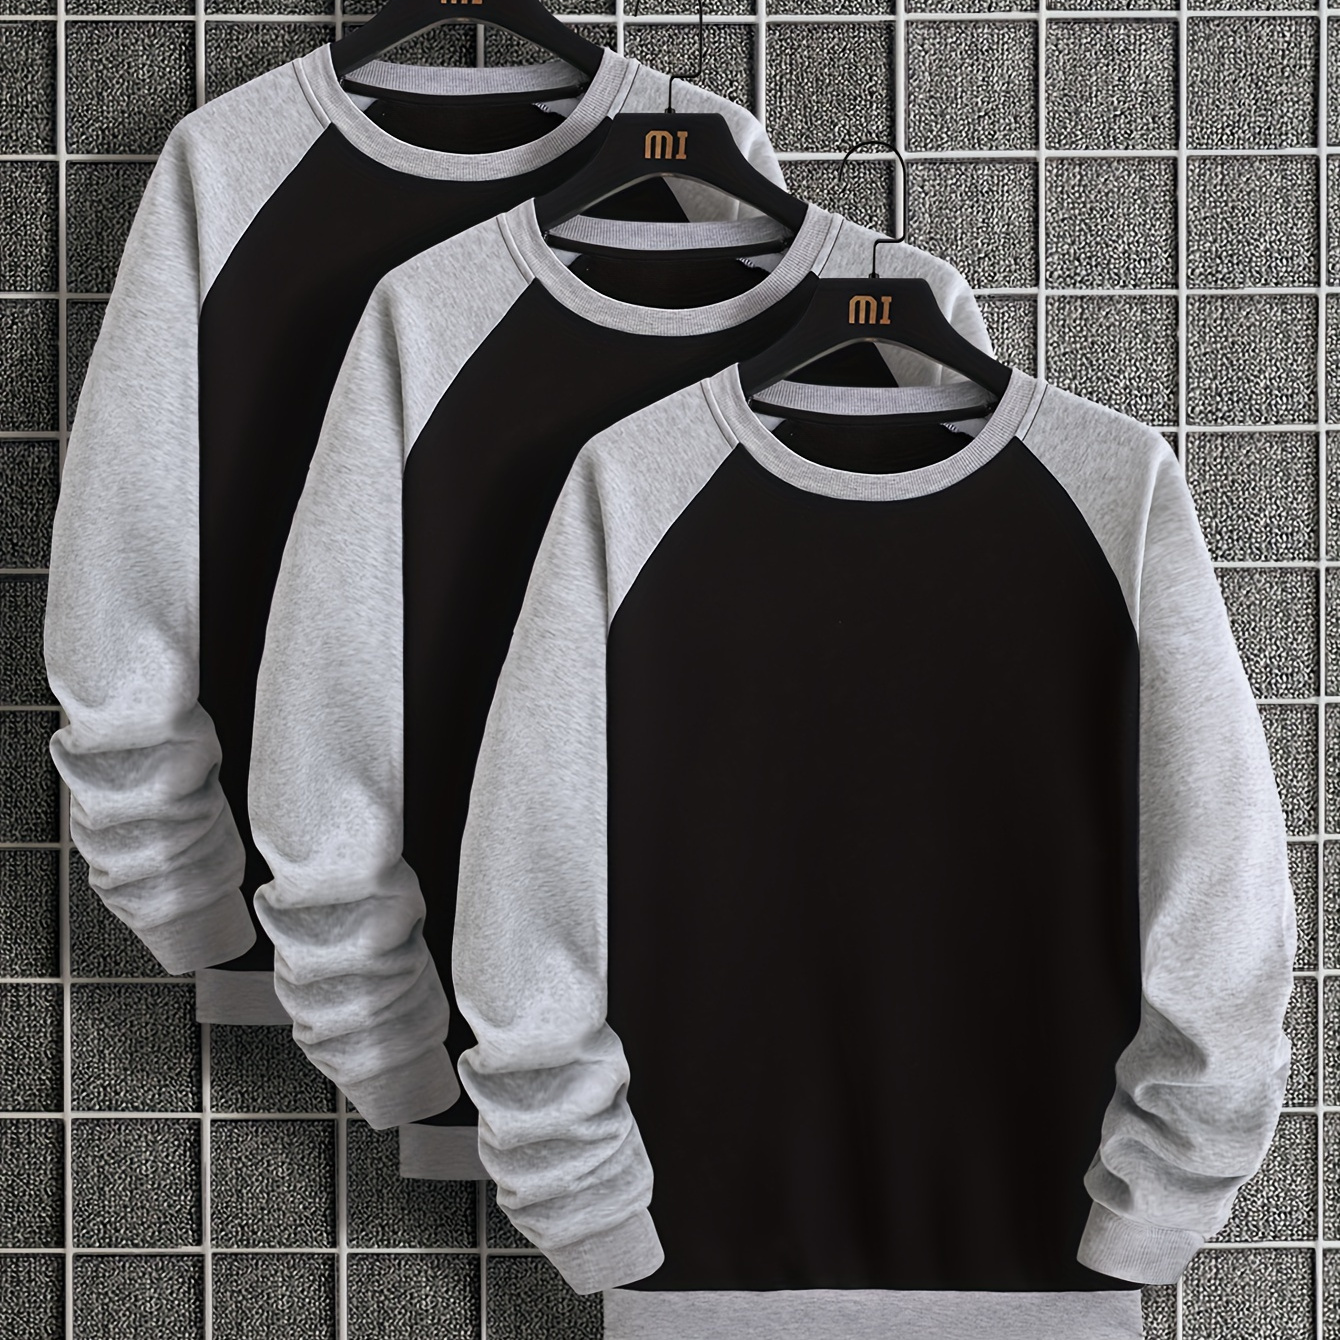 

Men's 3pcs Casual Raglan Crew Neck Sweatshirts For Sports/workout, Stylish Long Sleeve Sweatshirt Tops For Spring/autumn, Men's Clothing, Plus Size